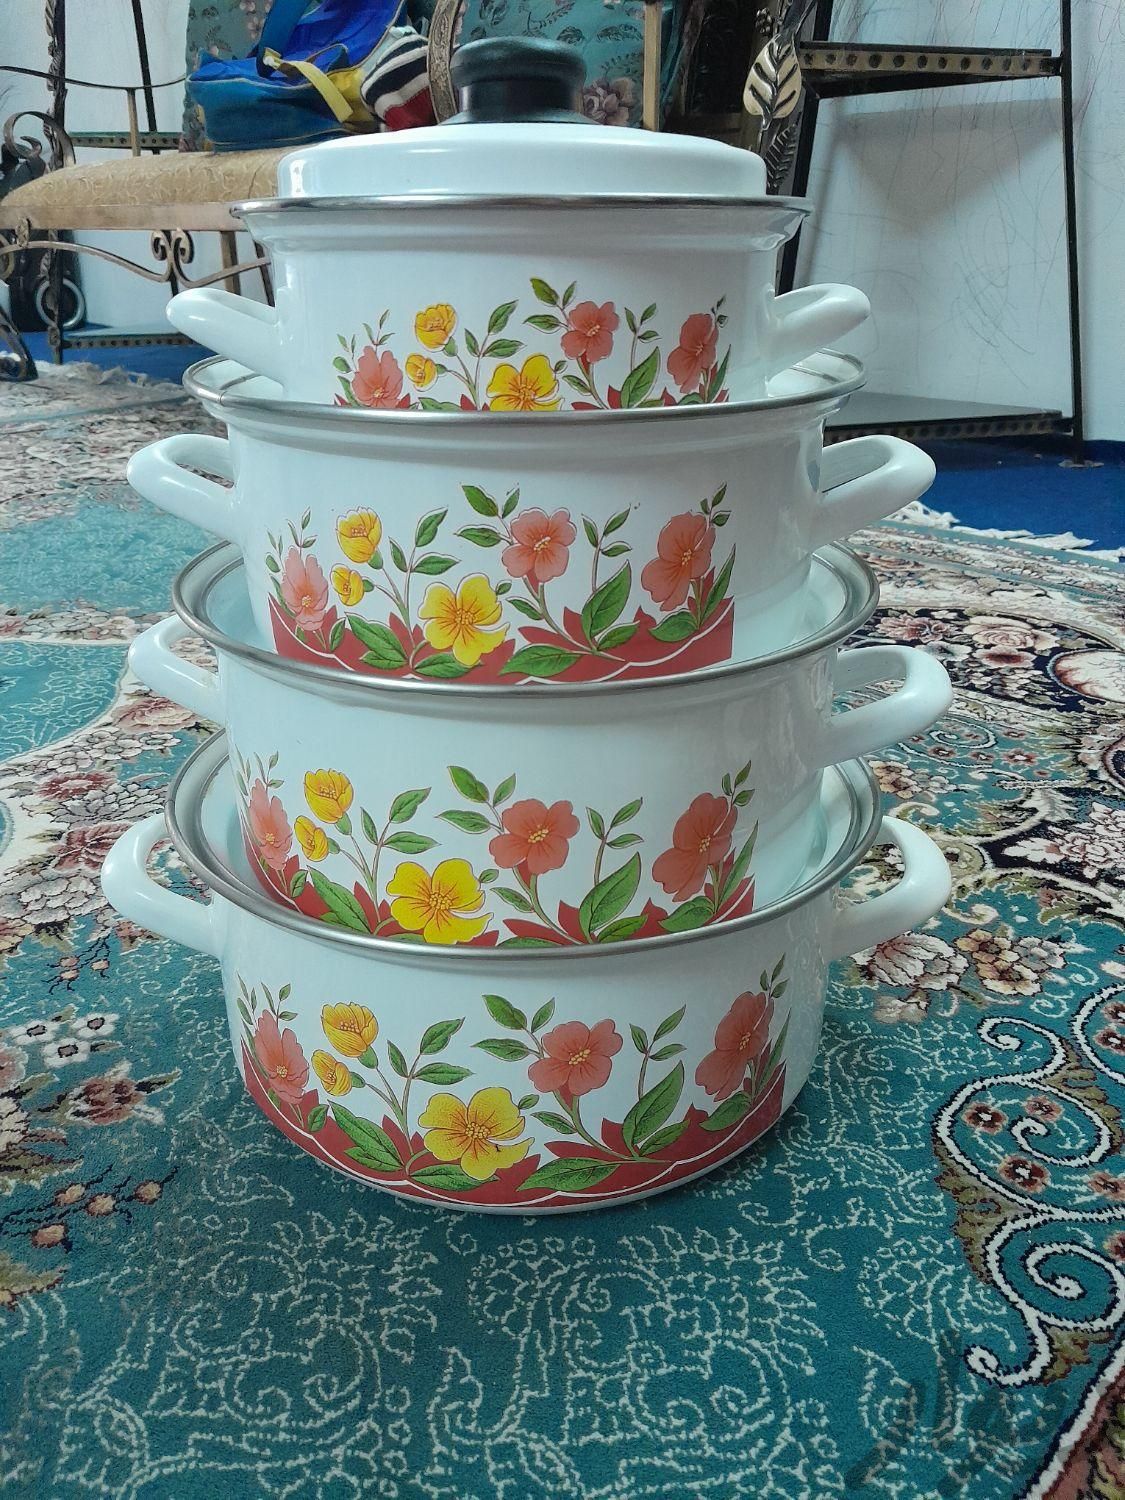 سرویس قابلمه لعابی ( اصل اصفهان )|ظروف پخت‌وپز|مشهد, بهارستان|دیوار